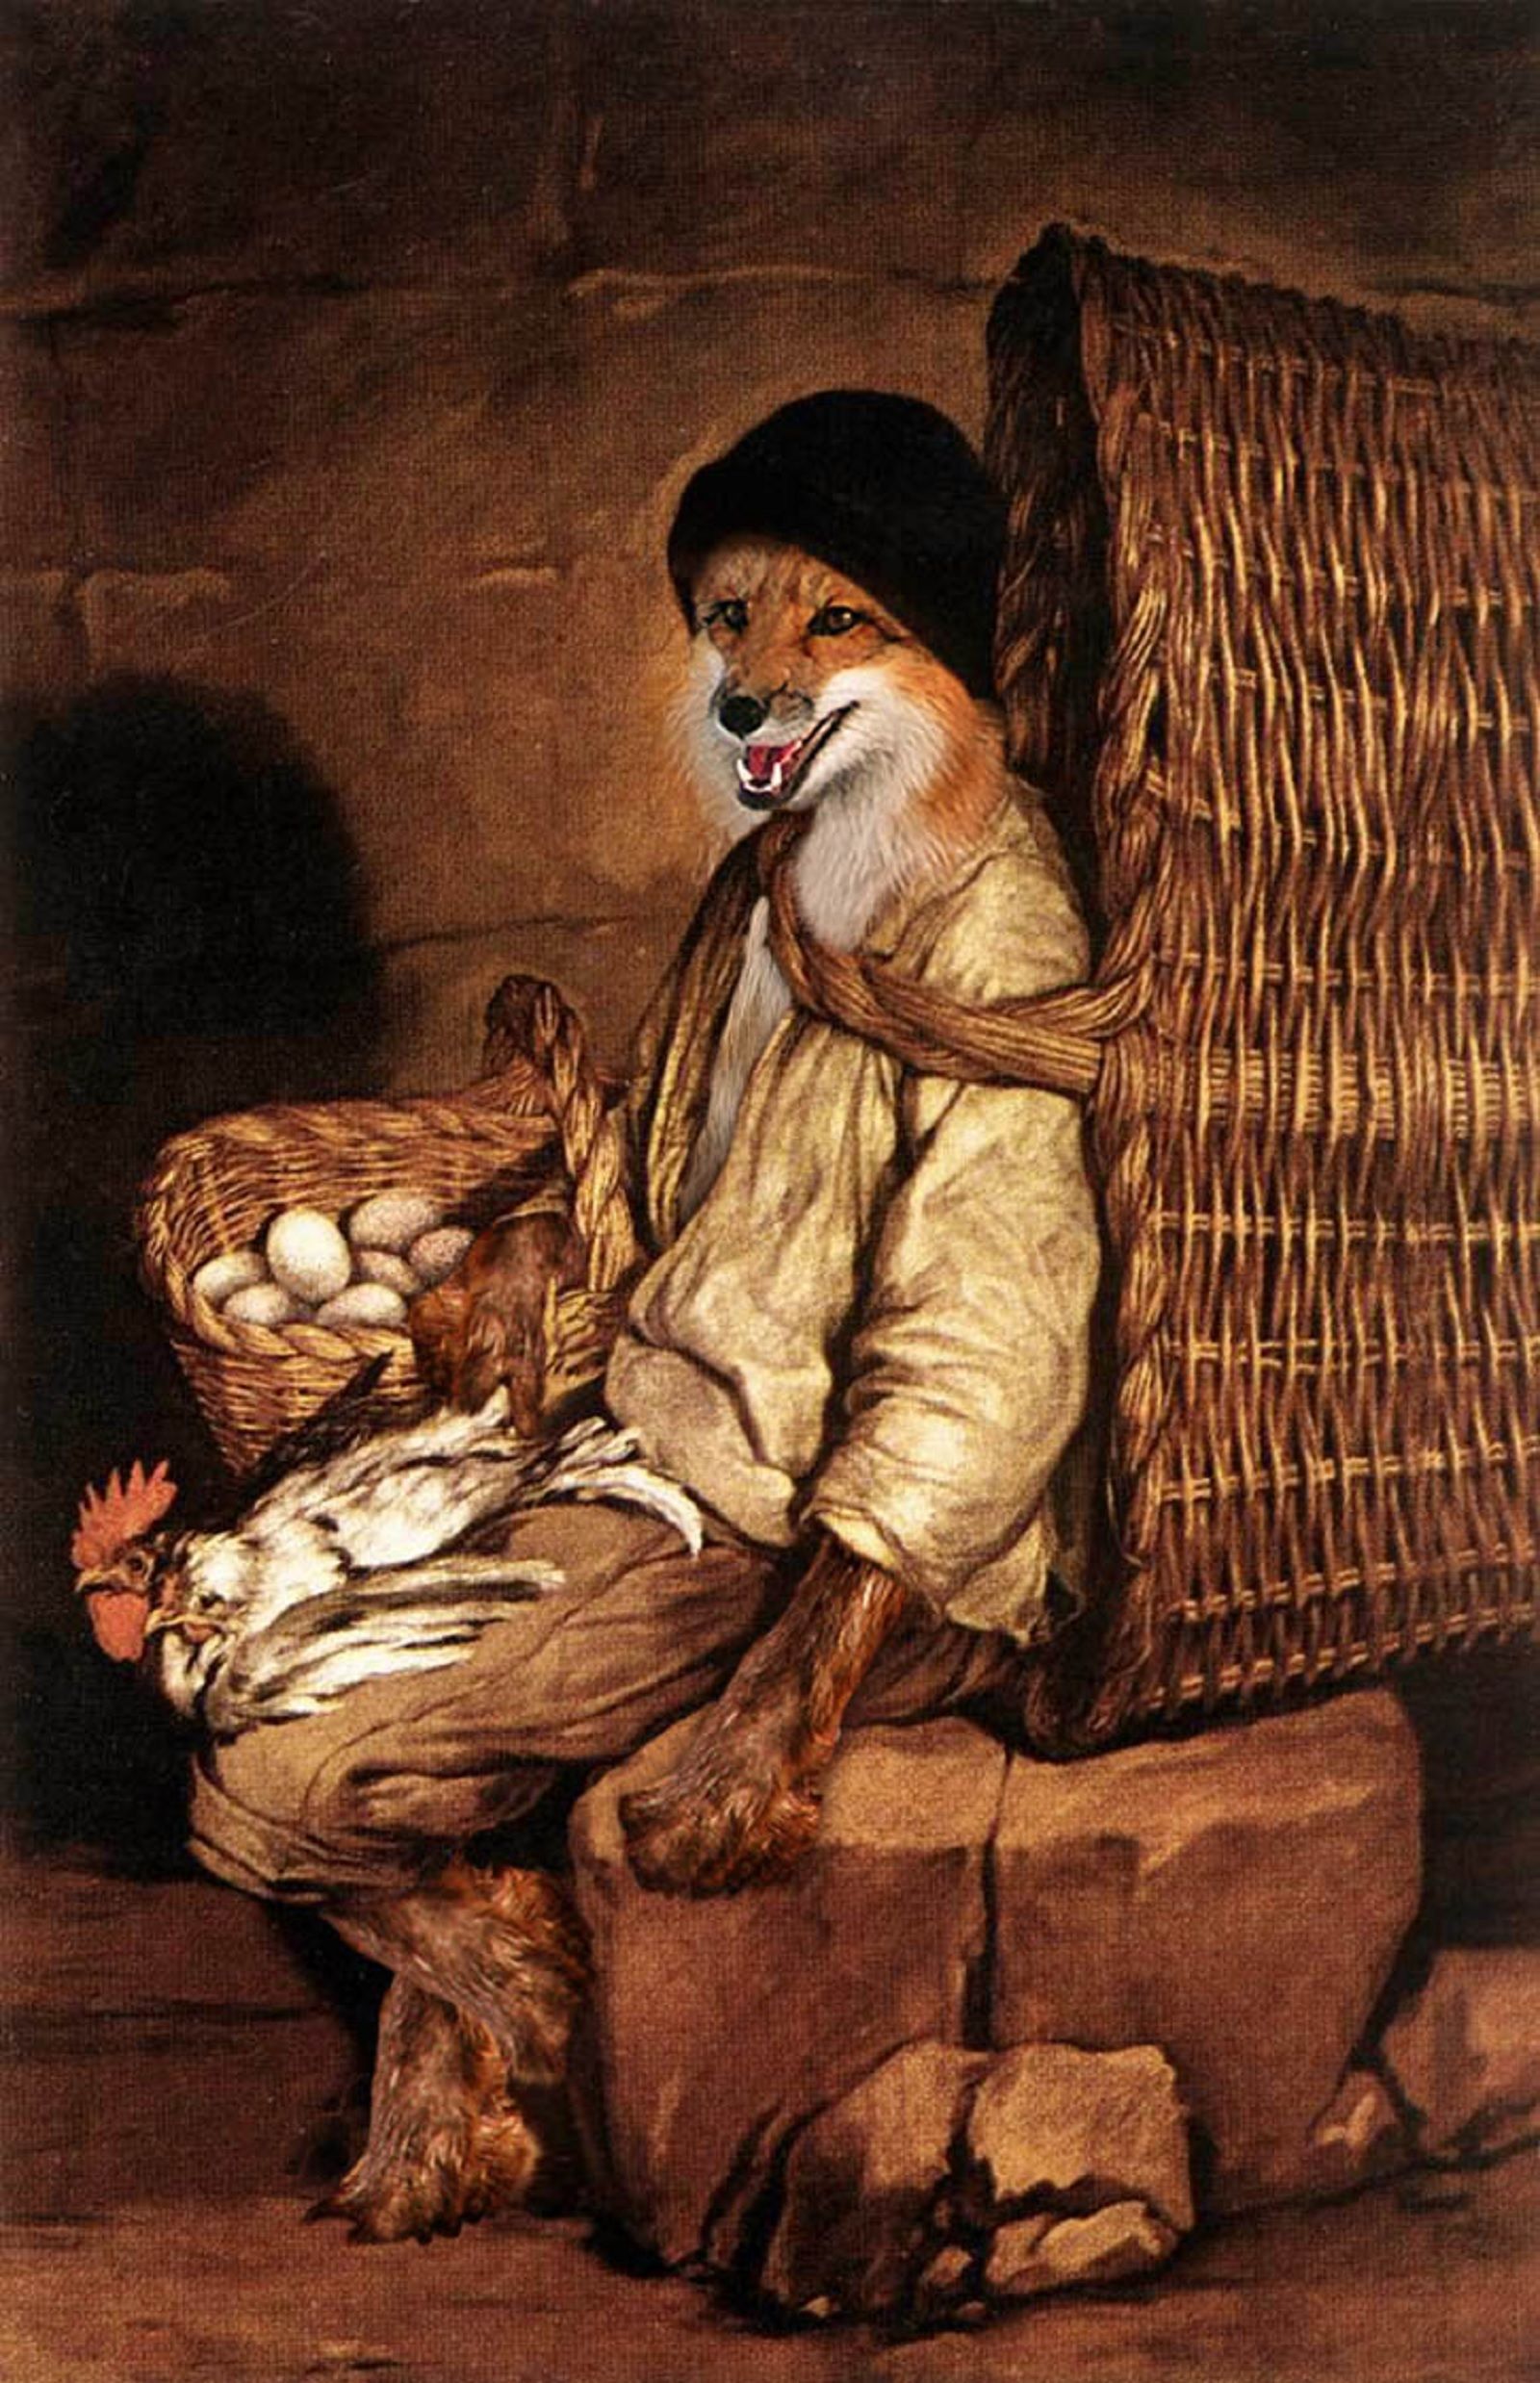 Amusing Images Of Animals Photoshopped Into Renaissance Paintings image 23